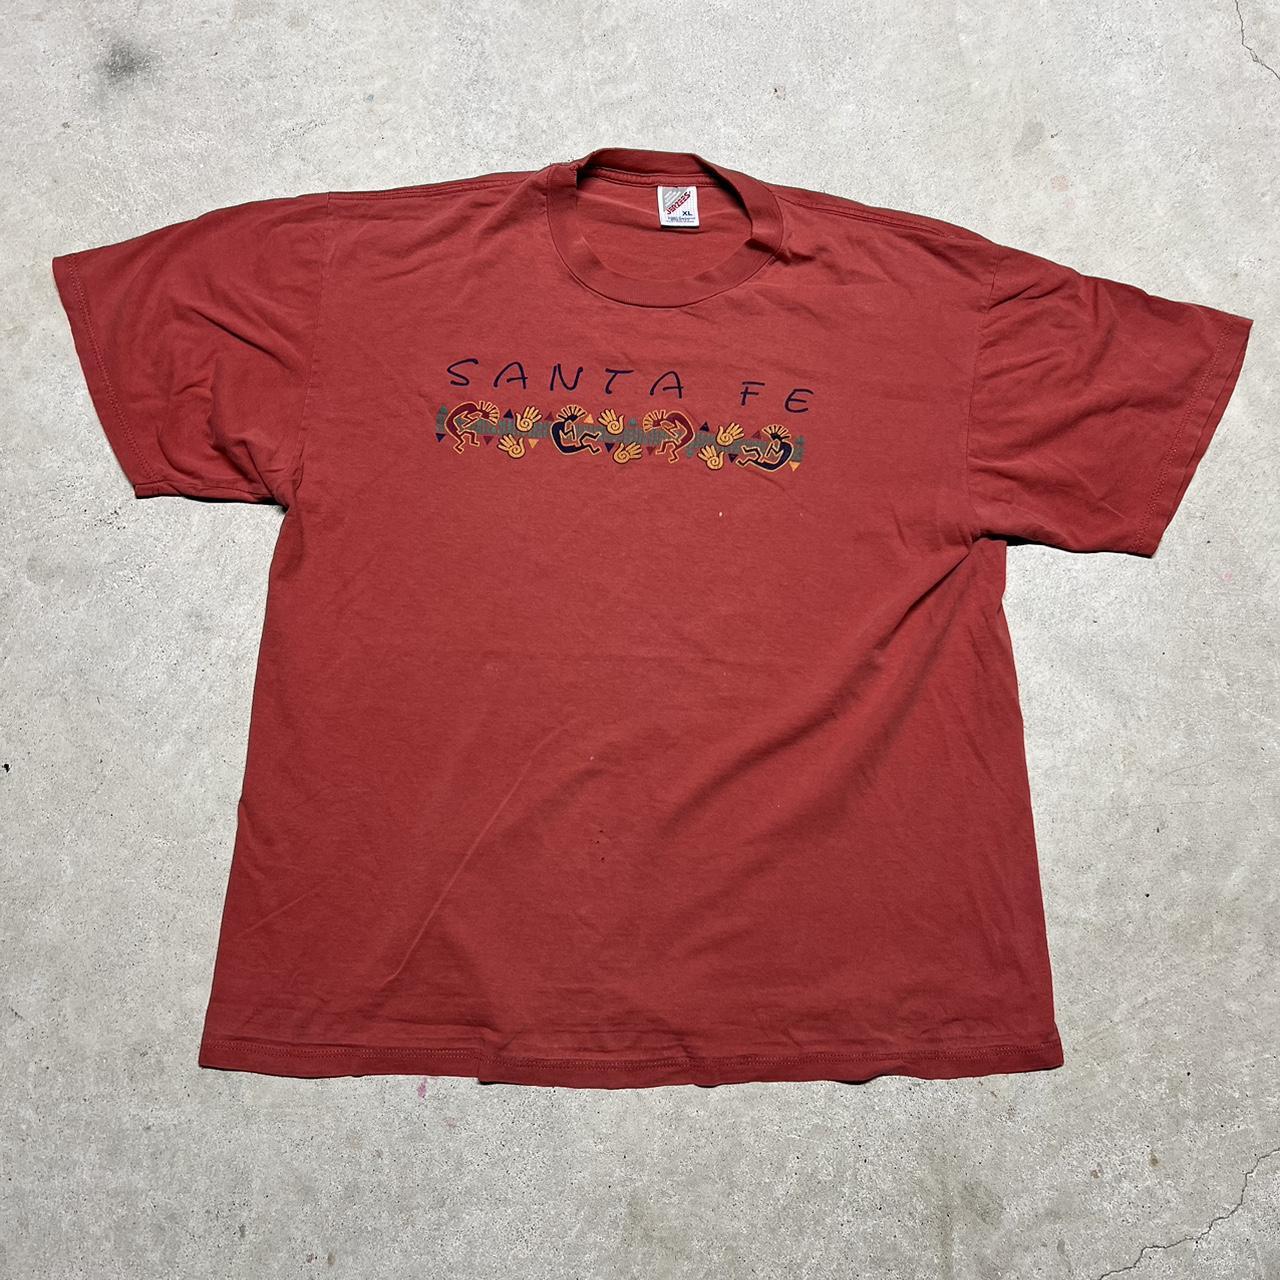 Vintage T-shirt Brand Santa Fe Sportswear - Depop